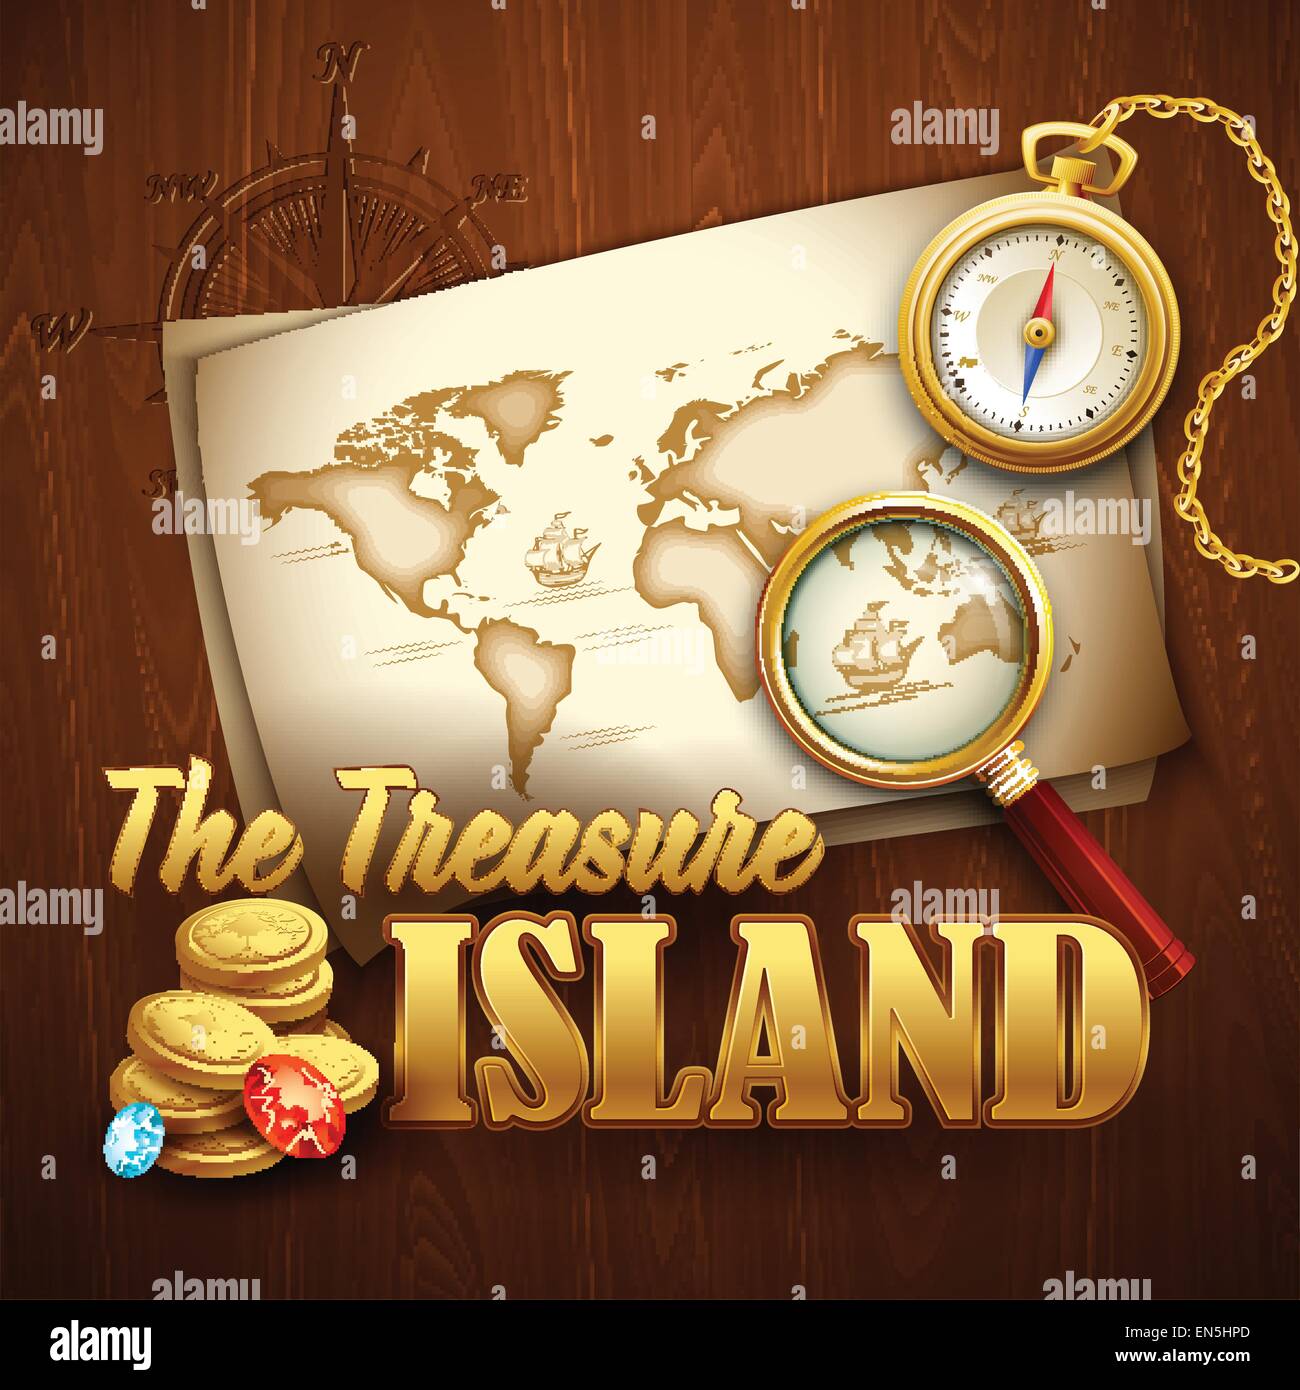 Treasure Island Party Flyer. Vektor Vorlage EPS 10 Stock Vektor